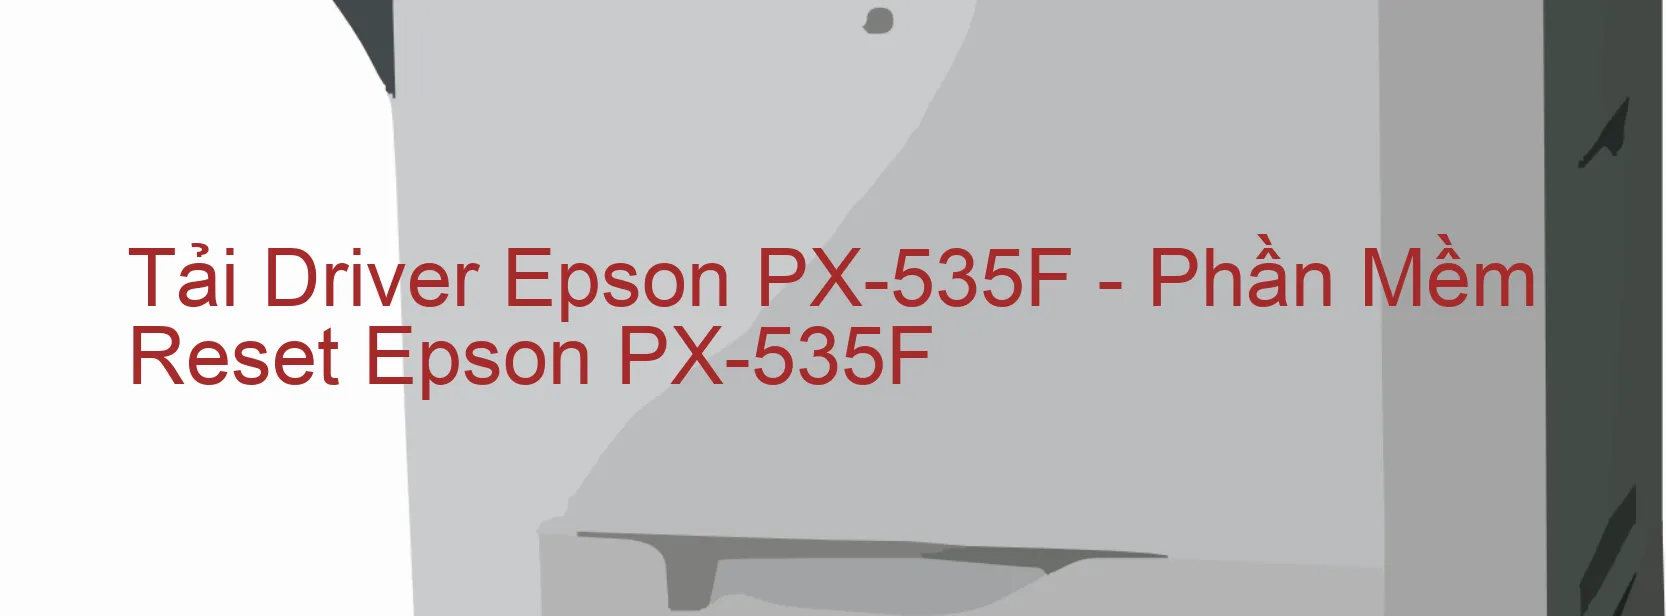 Driver Epson PX-535F, Phần Mềm Reset Epson PX-535F